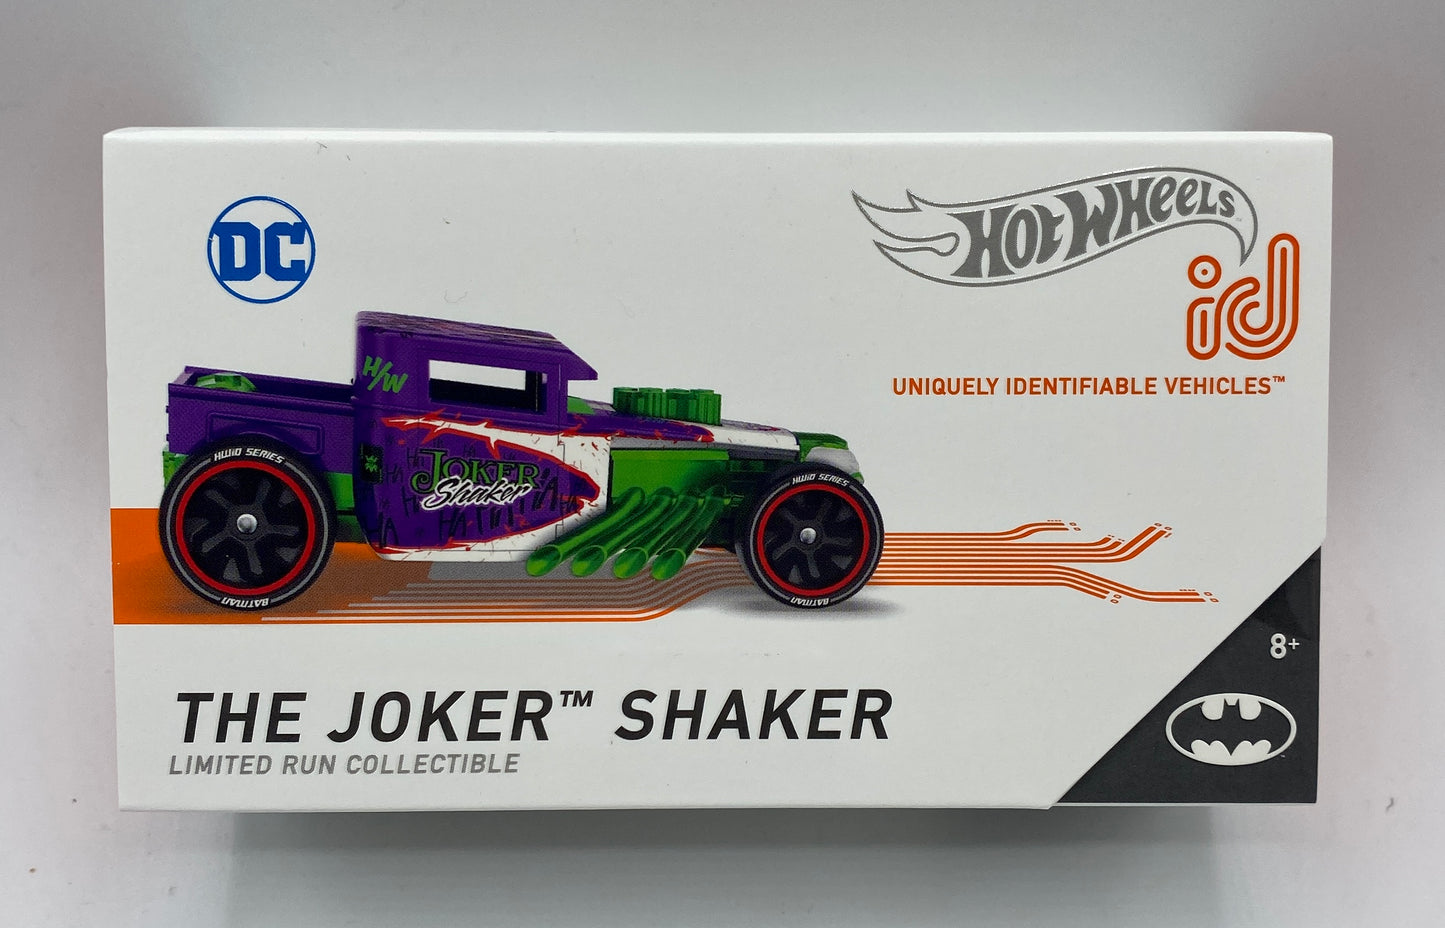 The Joker Shaker id